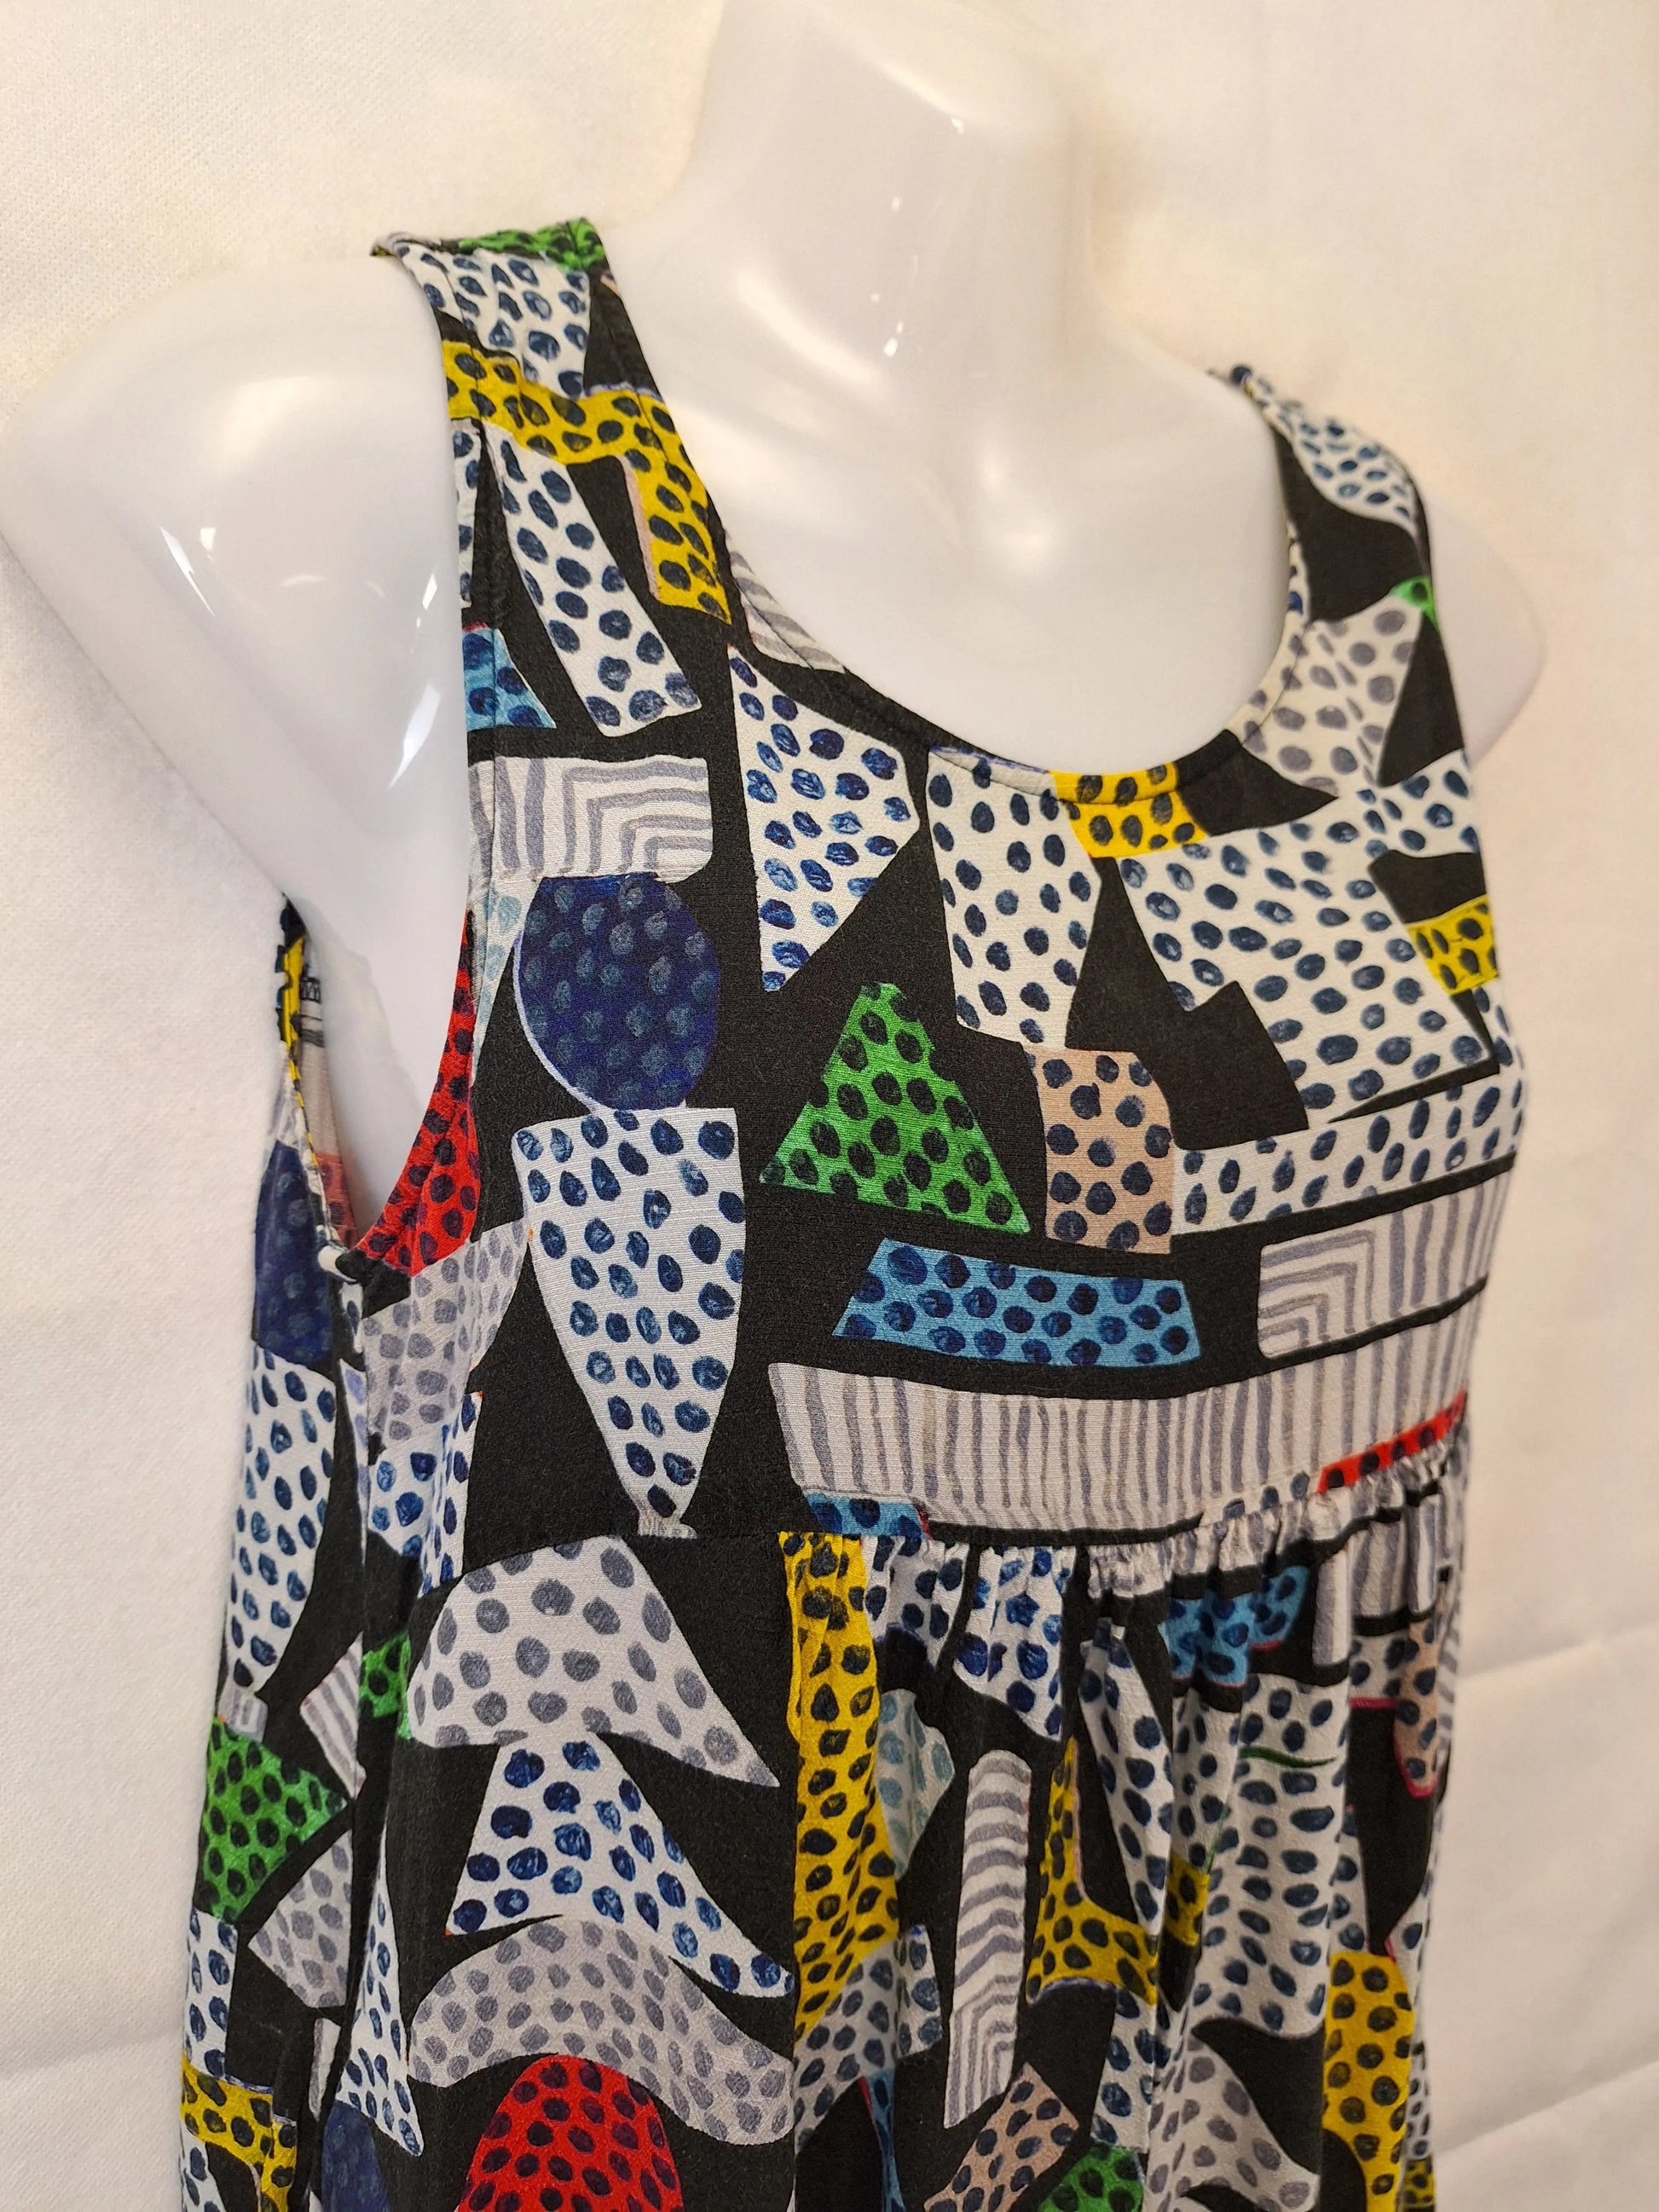 Gorman Julia Flanagan Graphic Mini Dress Size 8 by SwapUp-Online Second Hand Store-Online Thrift Store